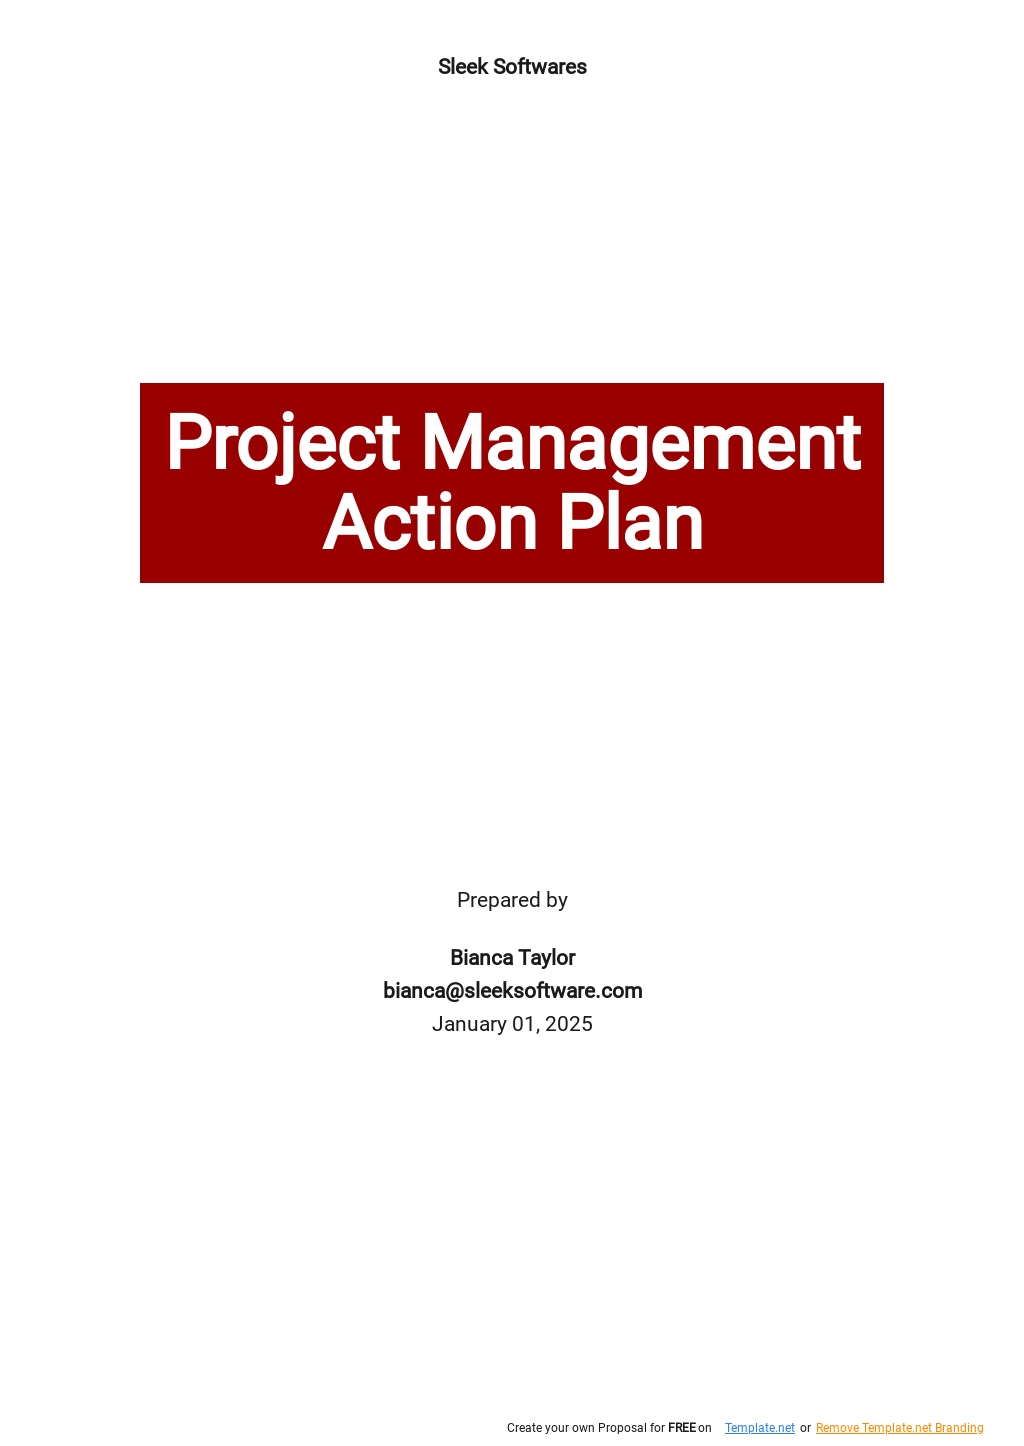 Project Management Action Plan Template